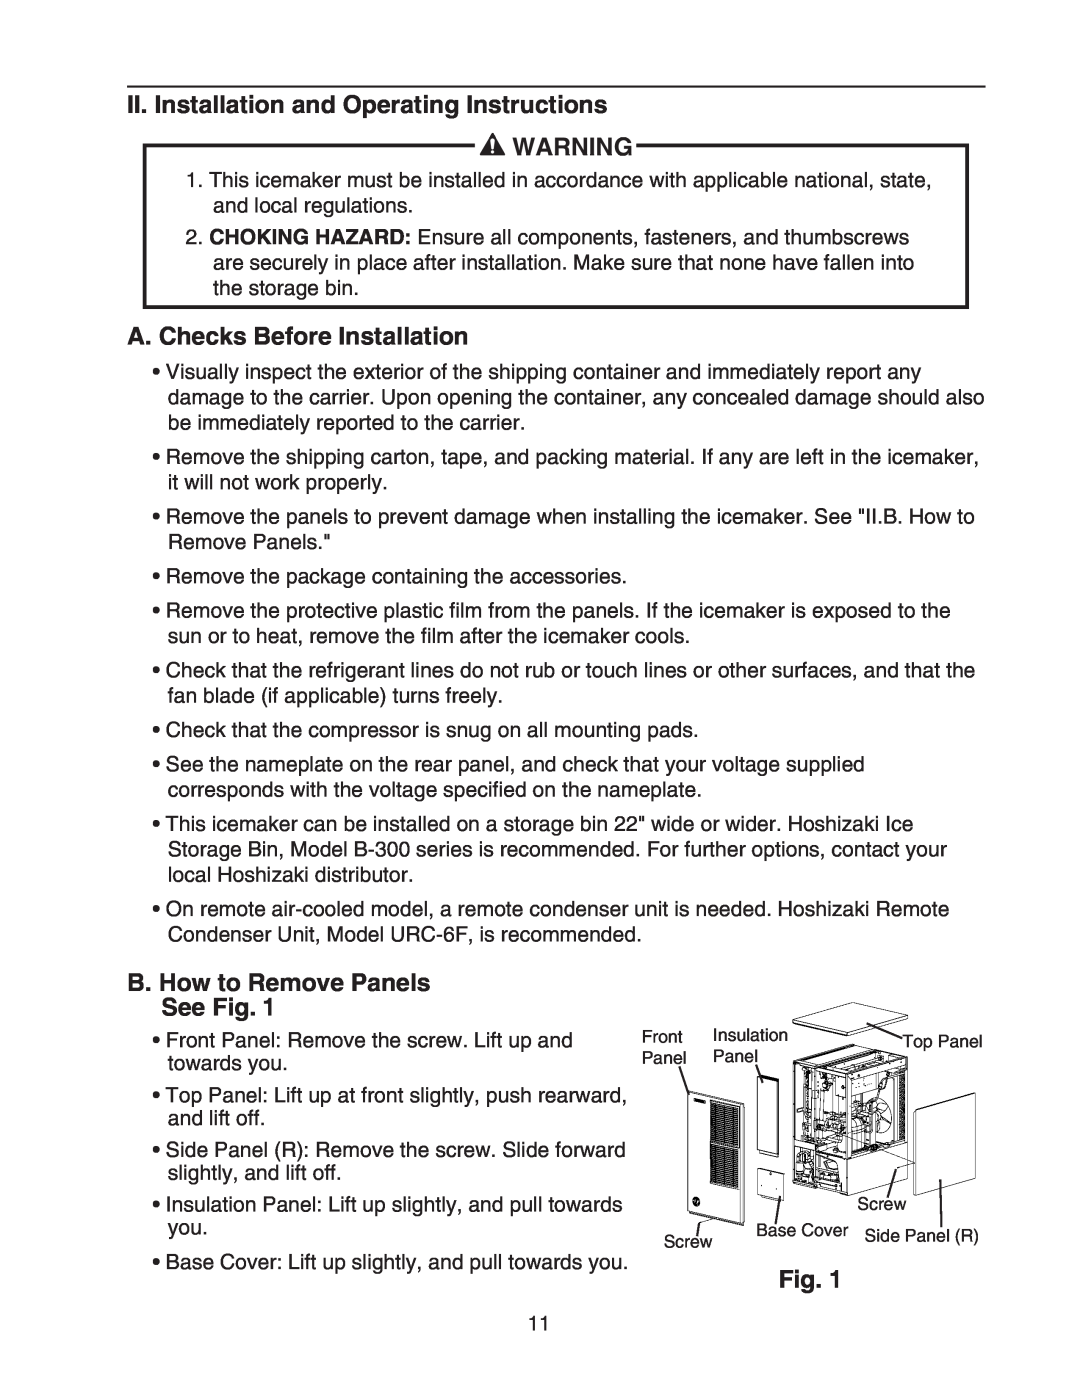 Hoshizaki KM-650MAH II. Installation and Operating Instructions, A. Checks Before Installation, B. How to Remove Panels 